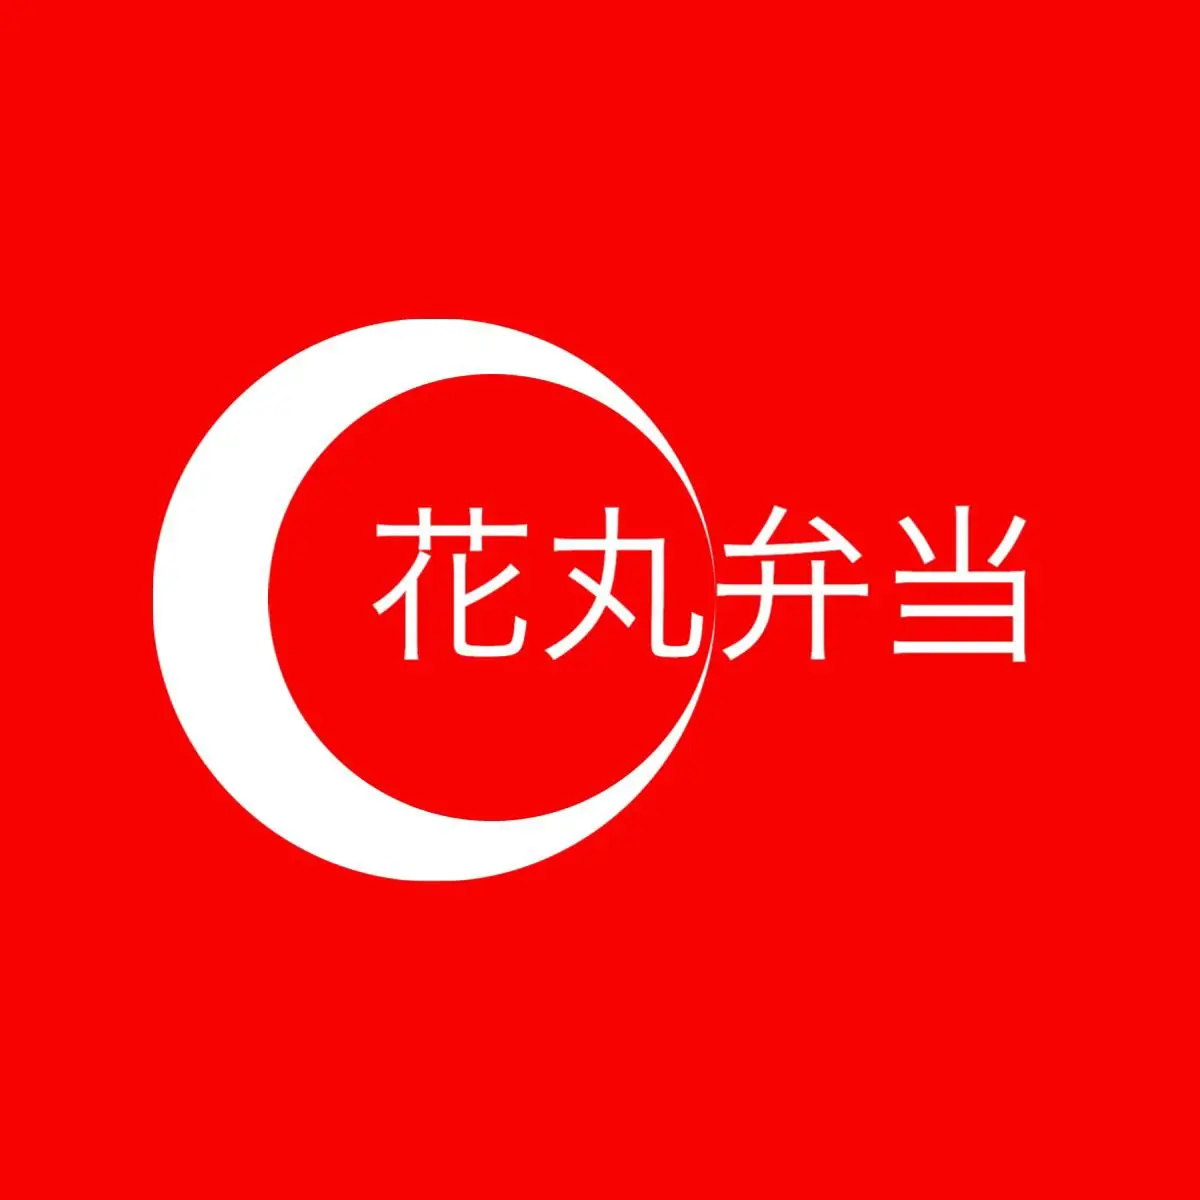 Red bento logo